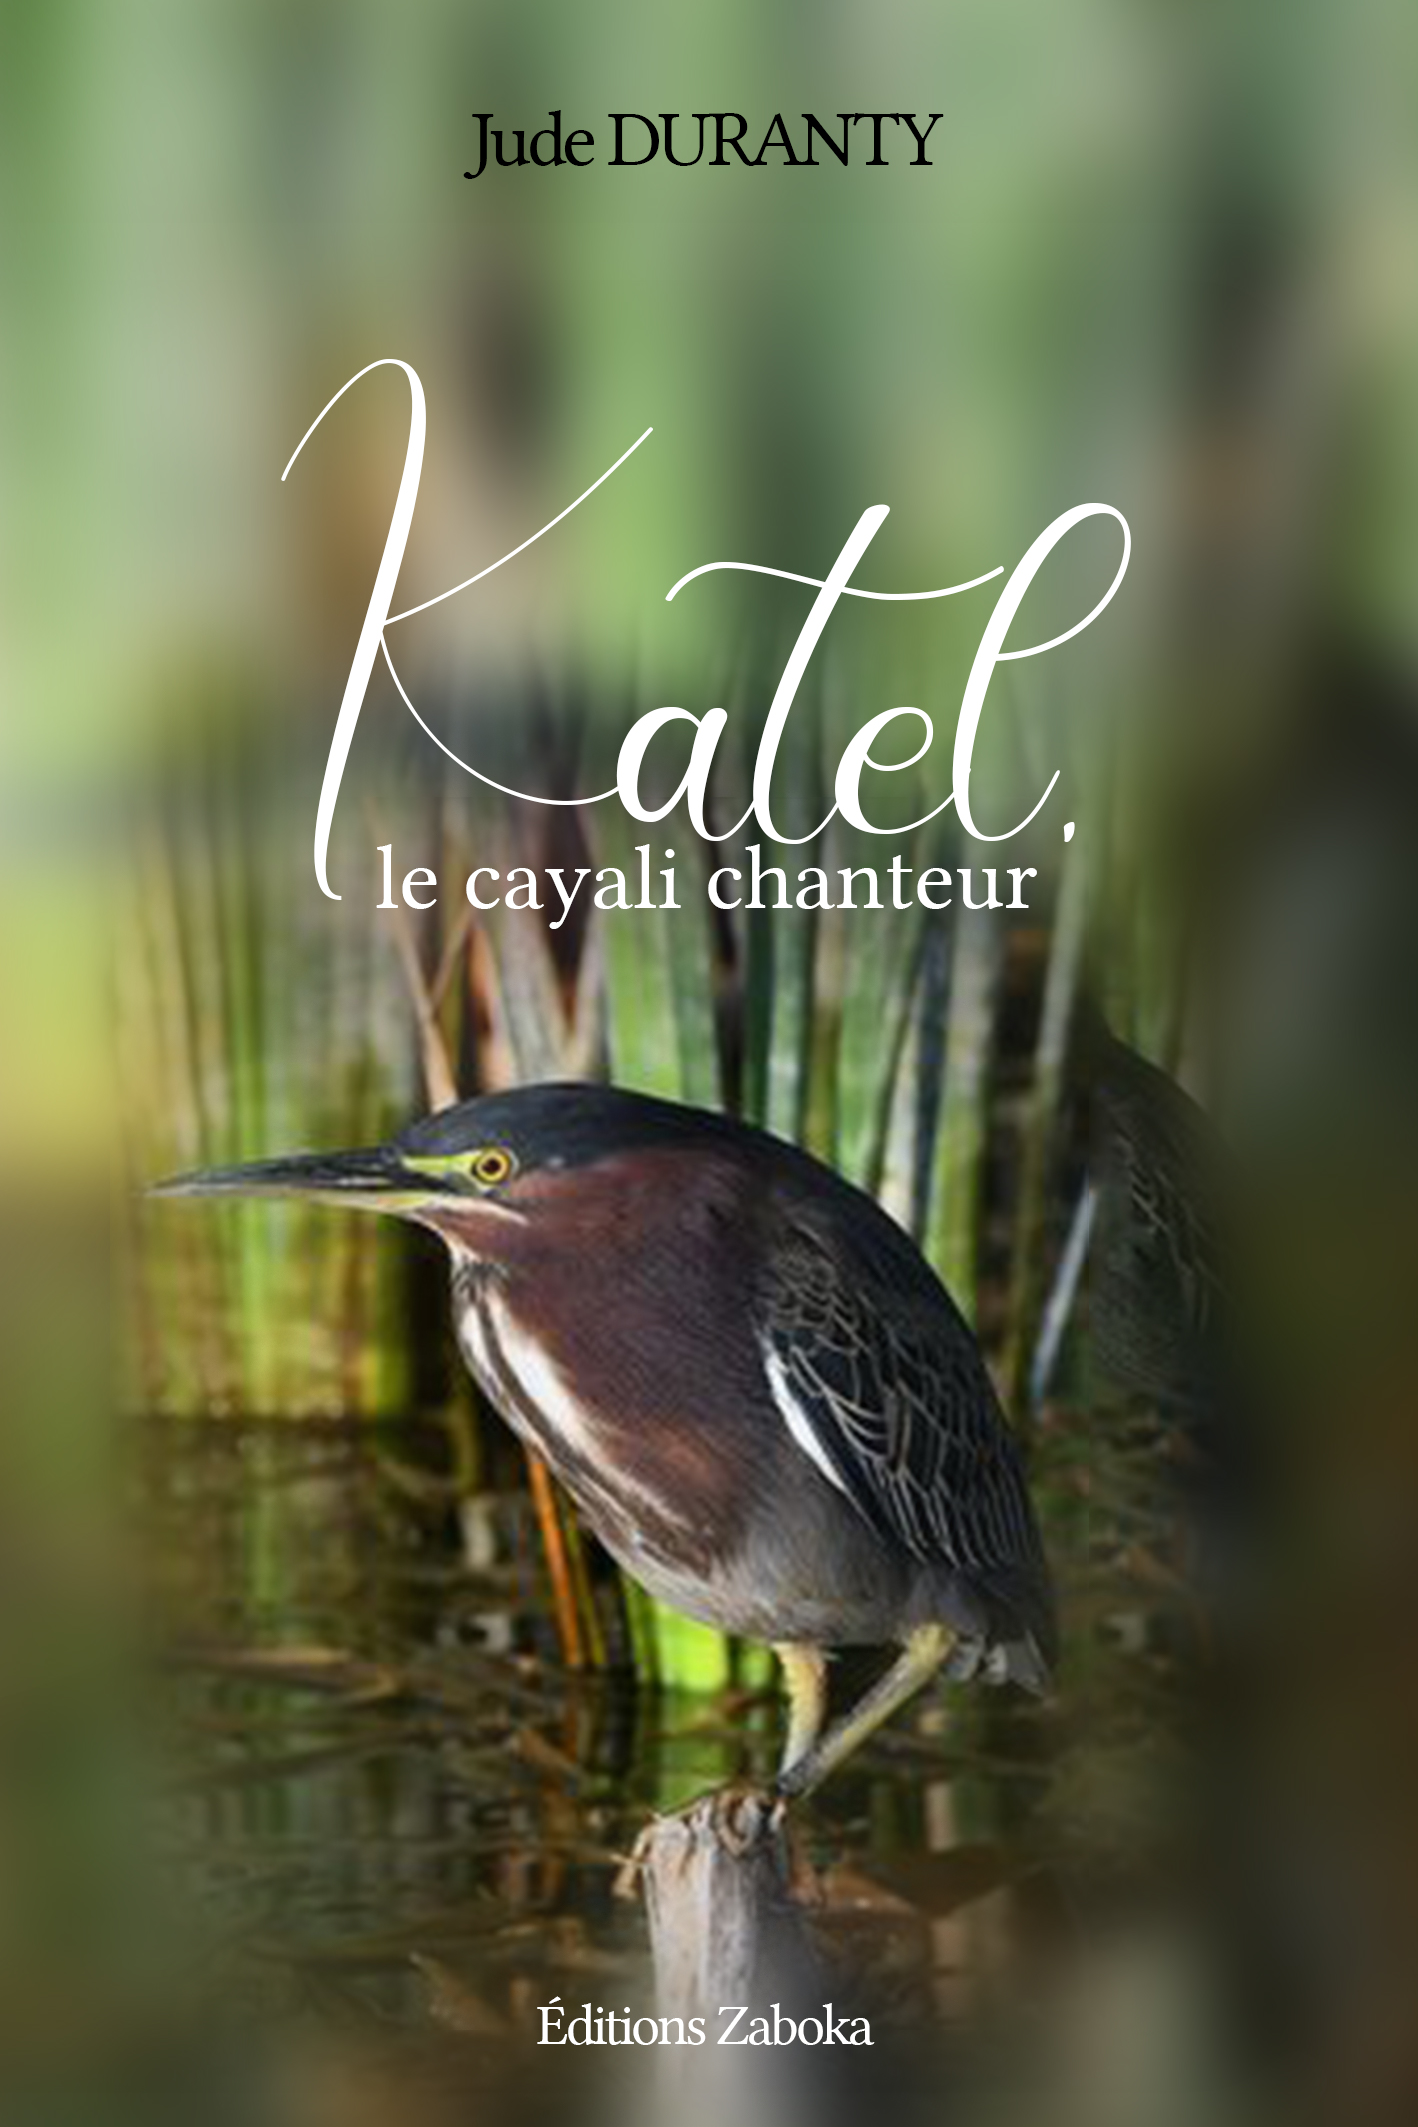 Katel, le cayali chanteur